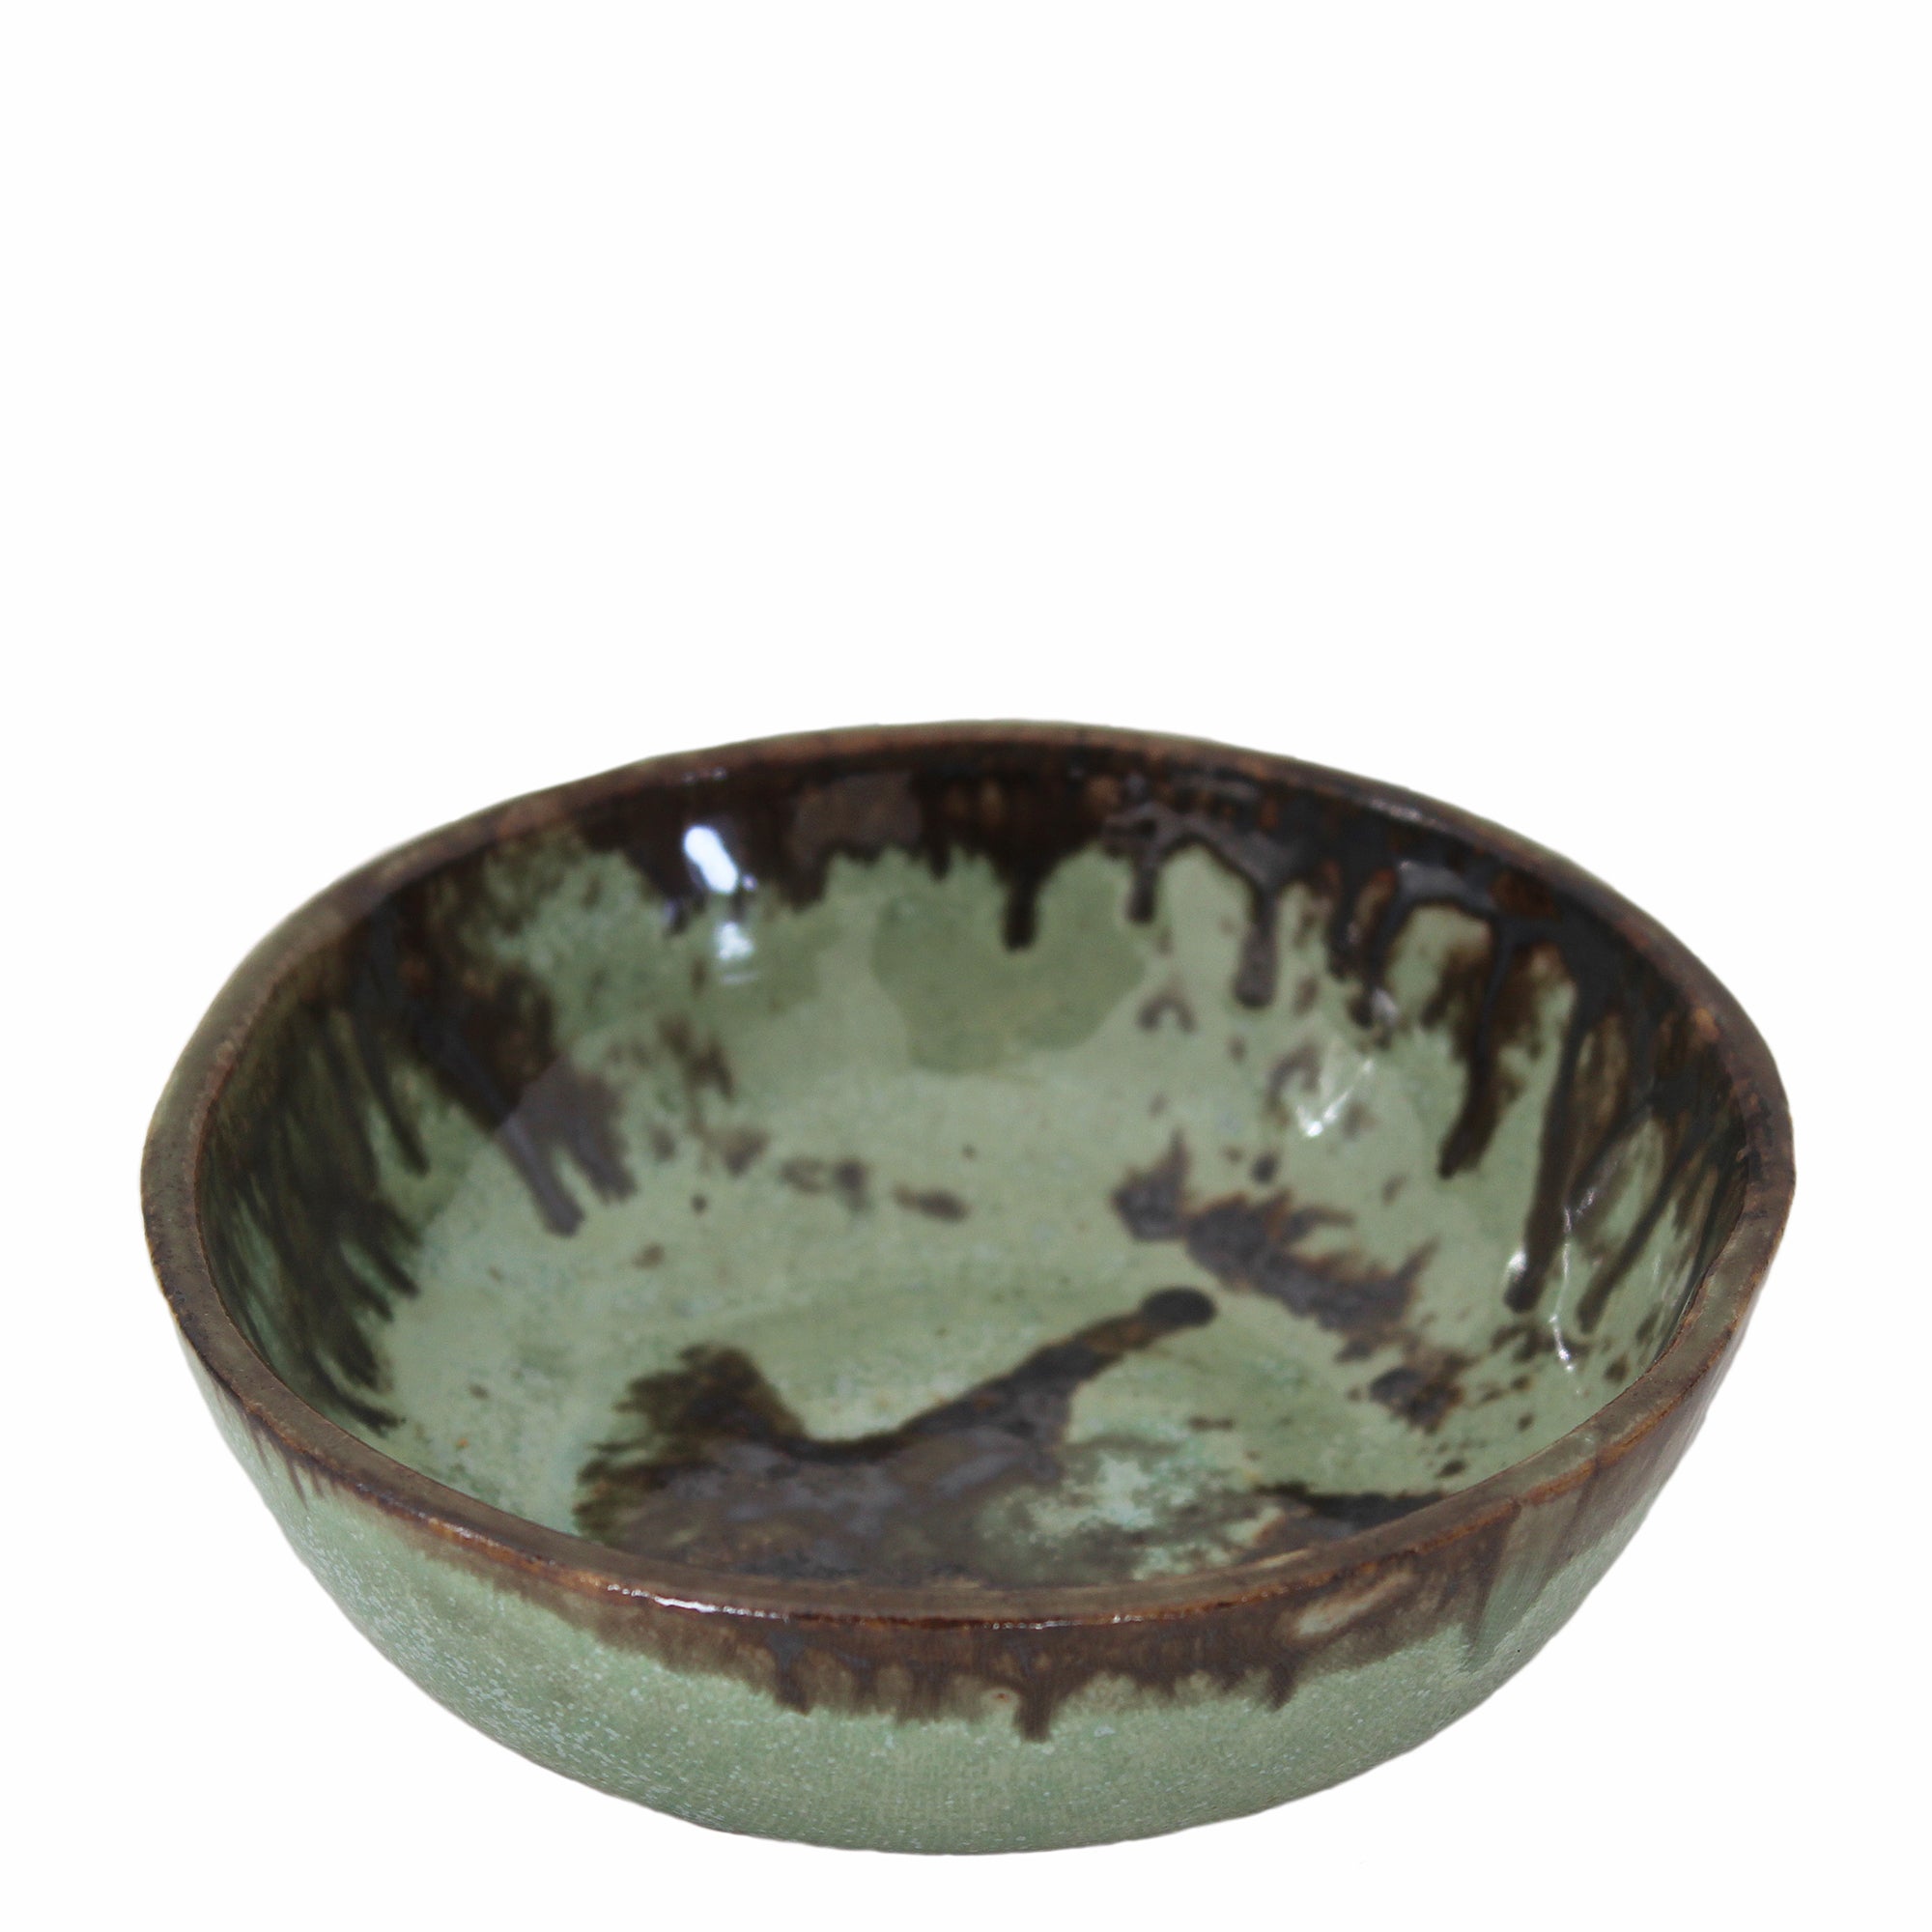 small handmade ceramic bowl